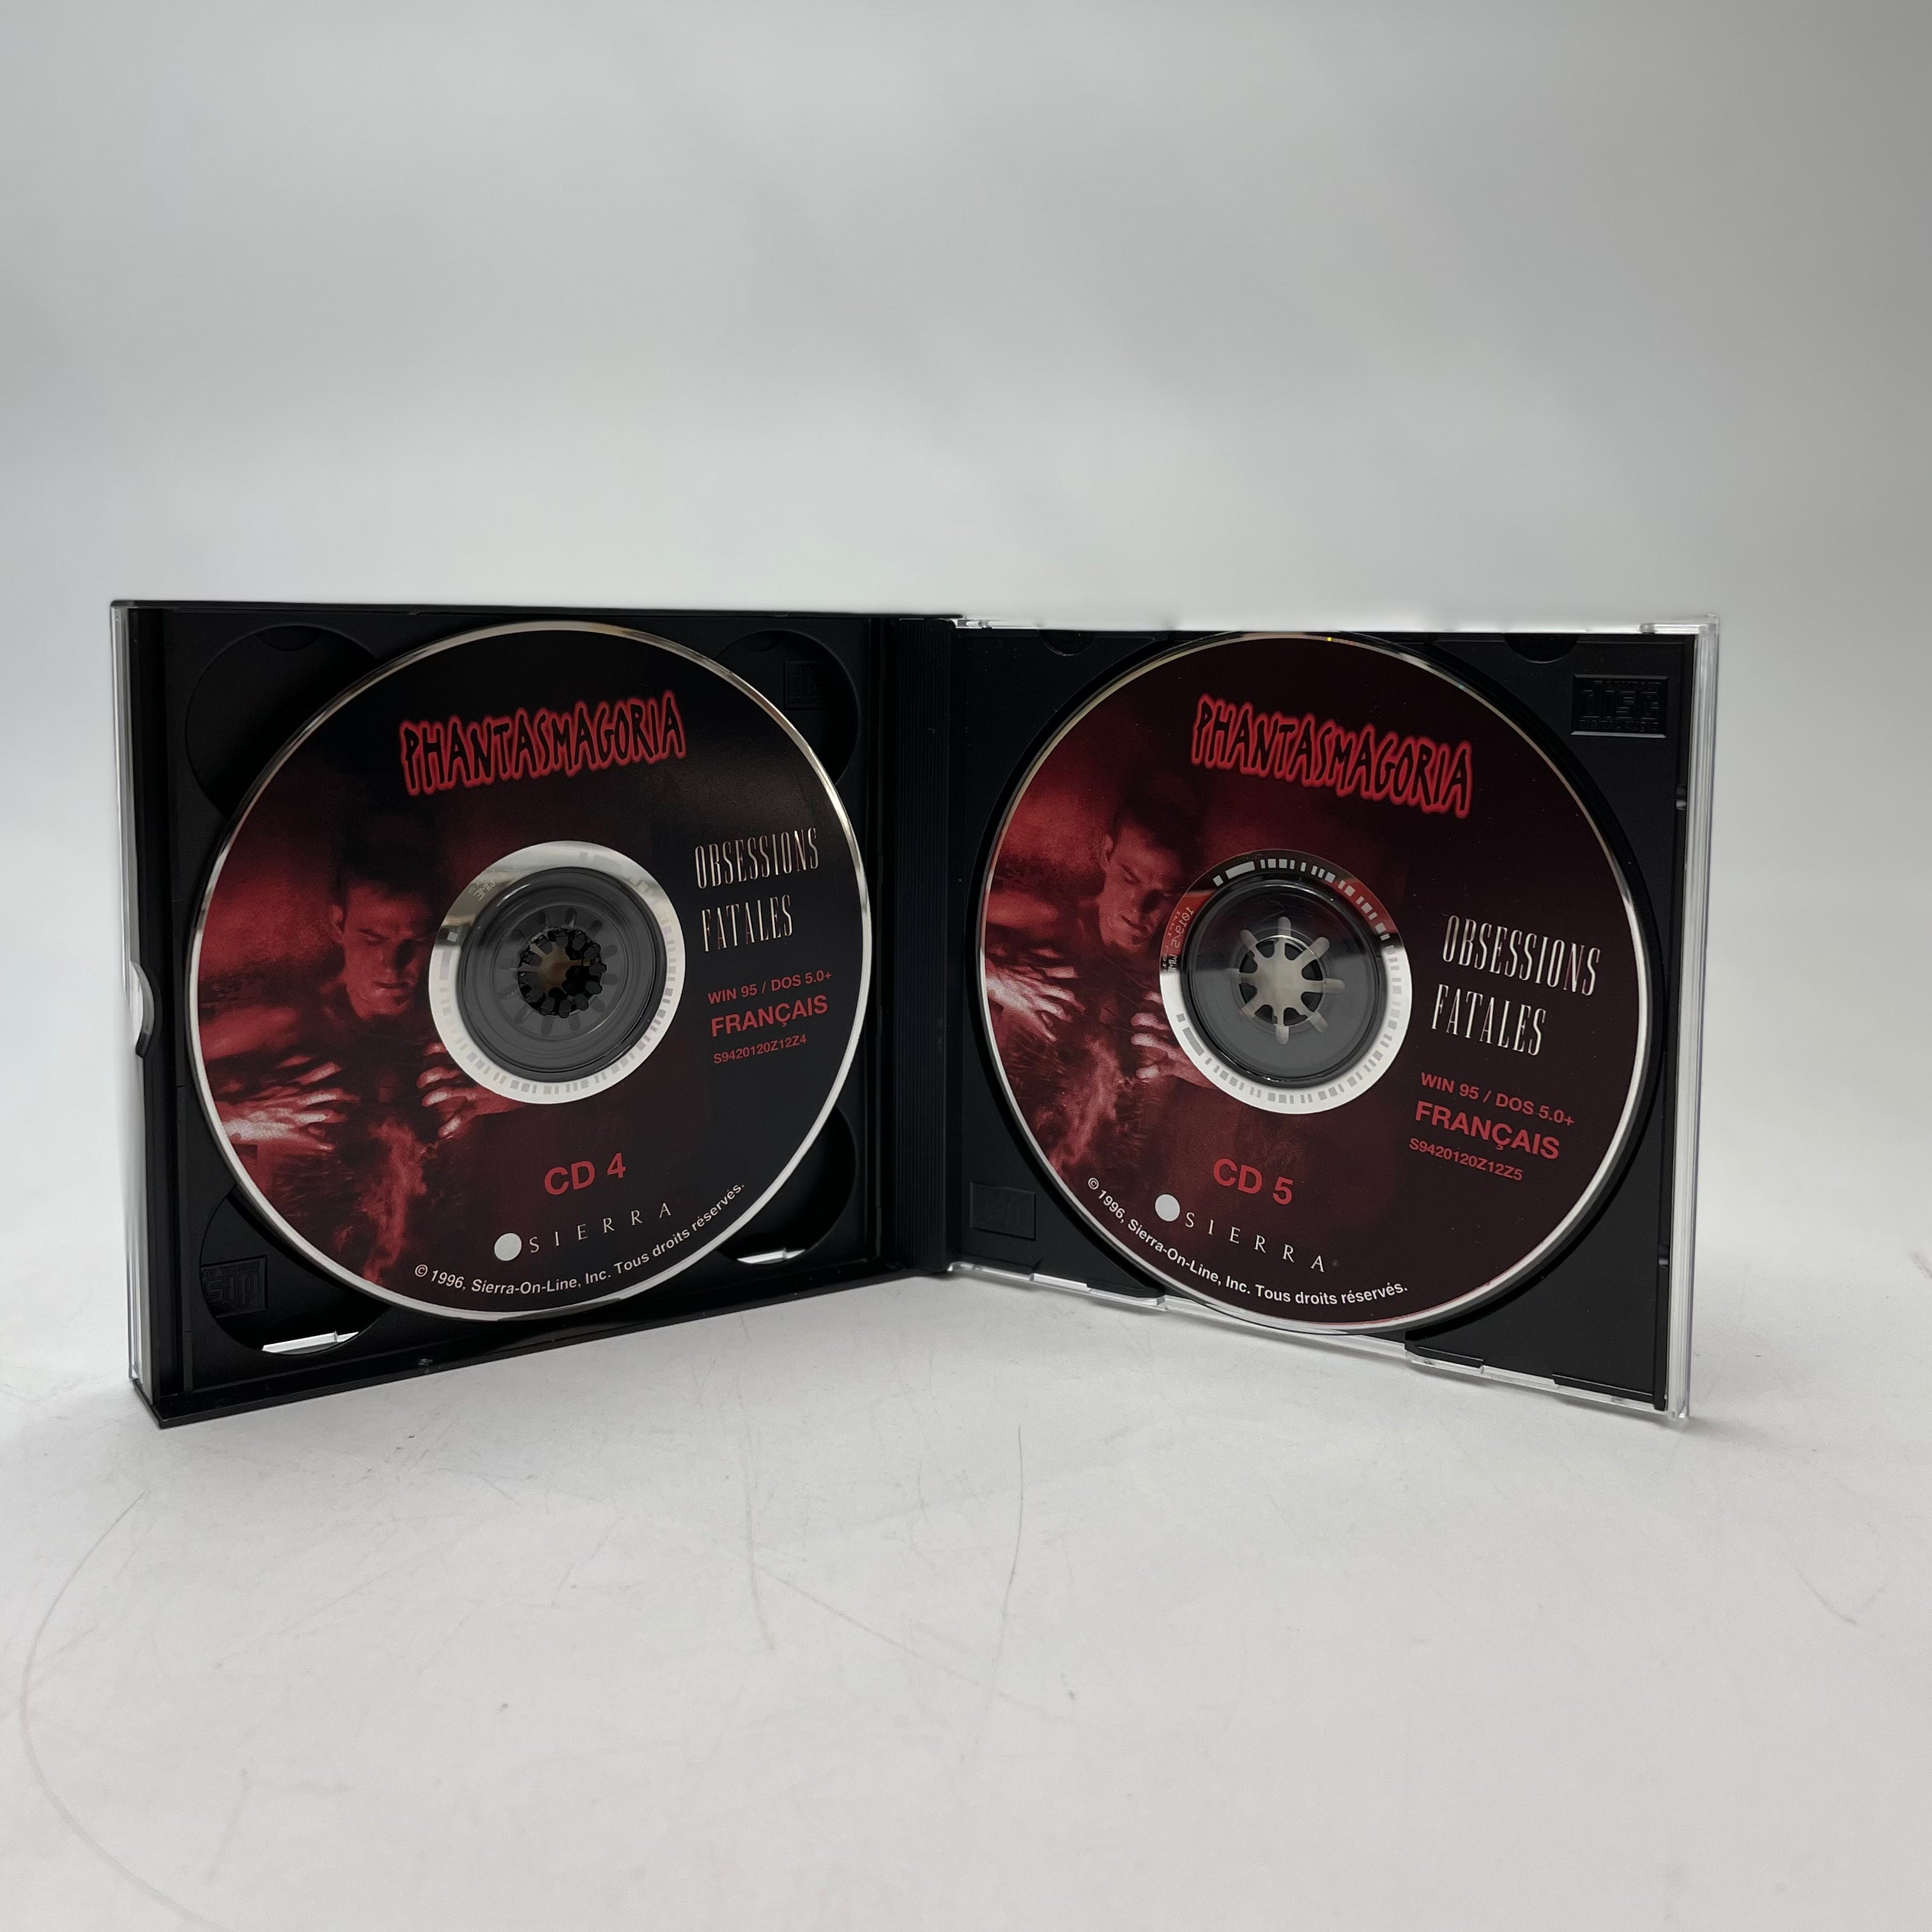 Phantasmagoria Obsessions Fatales - Coffret Complet 5 CD (Edition Française)